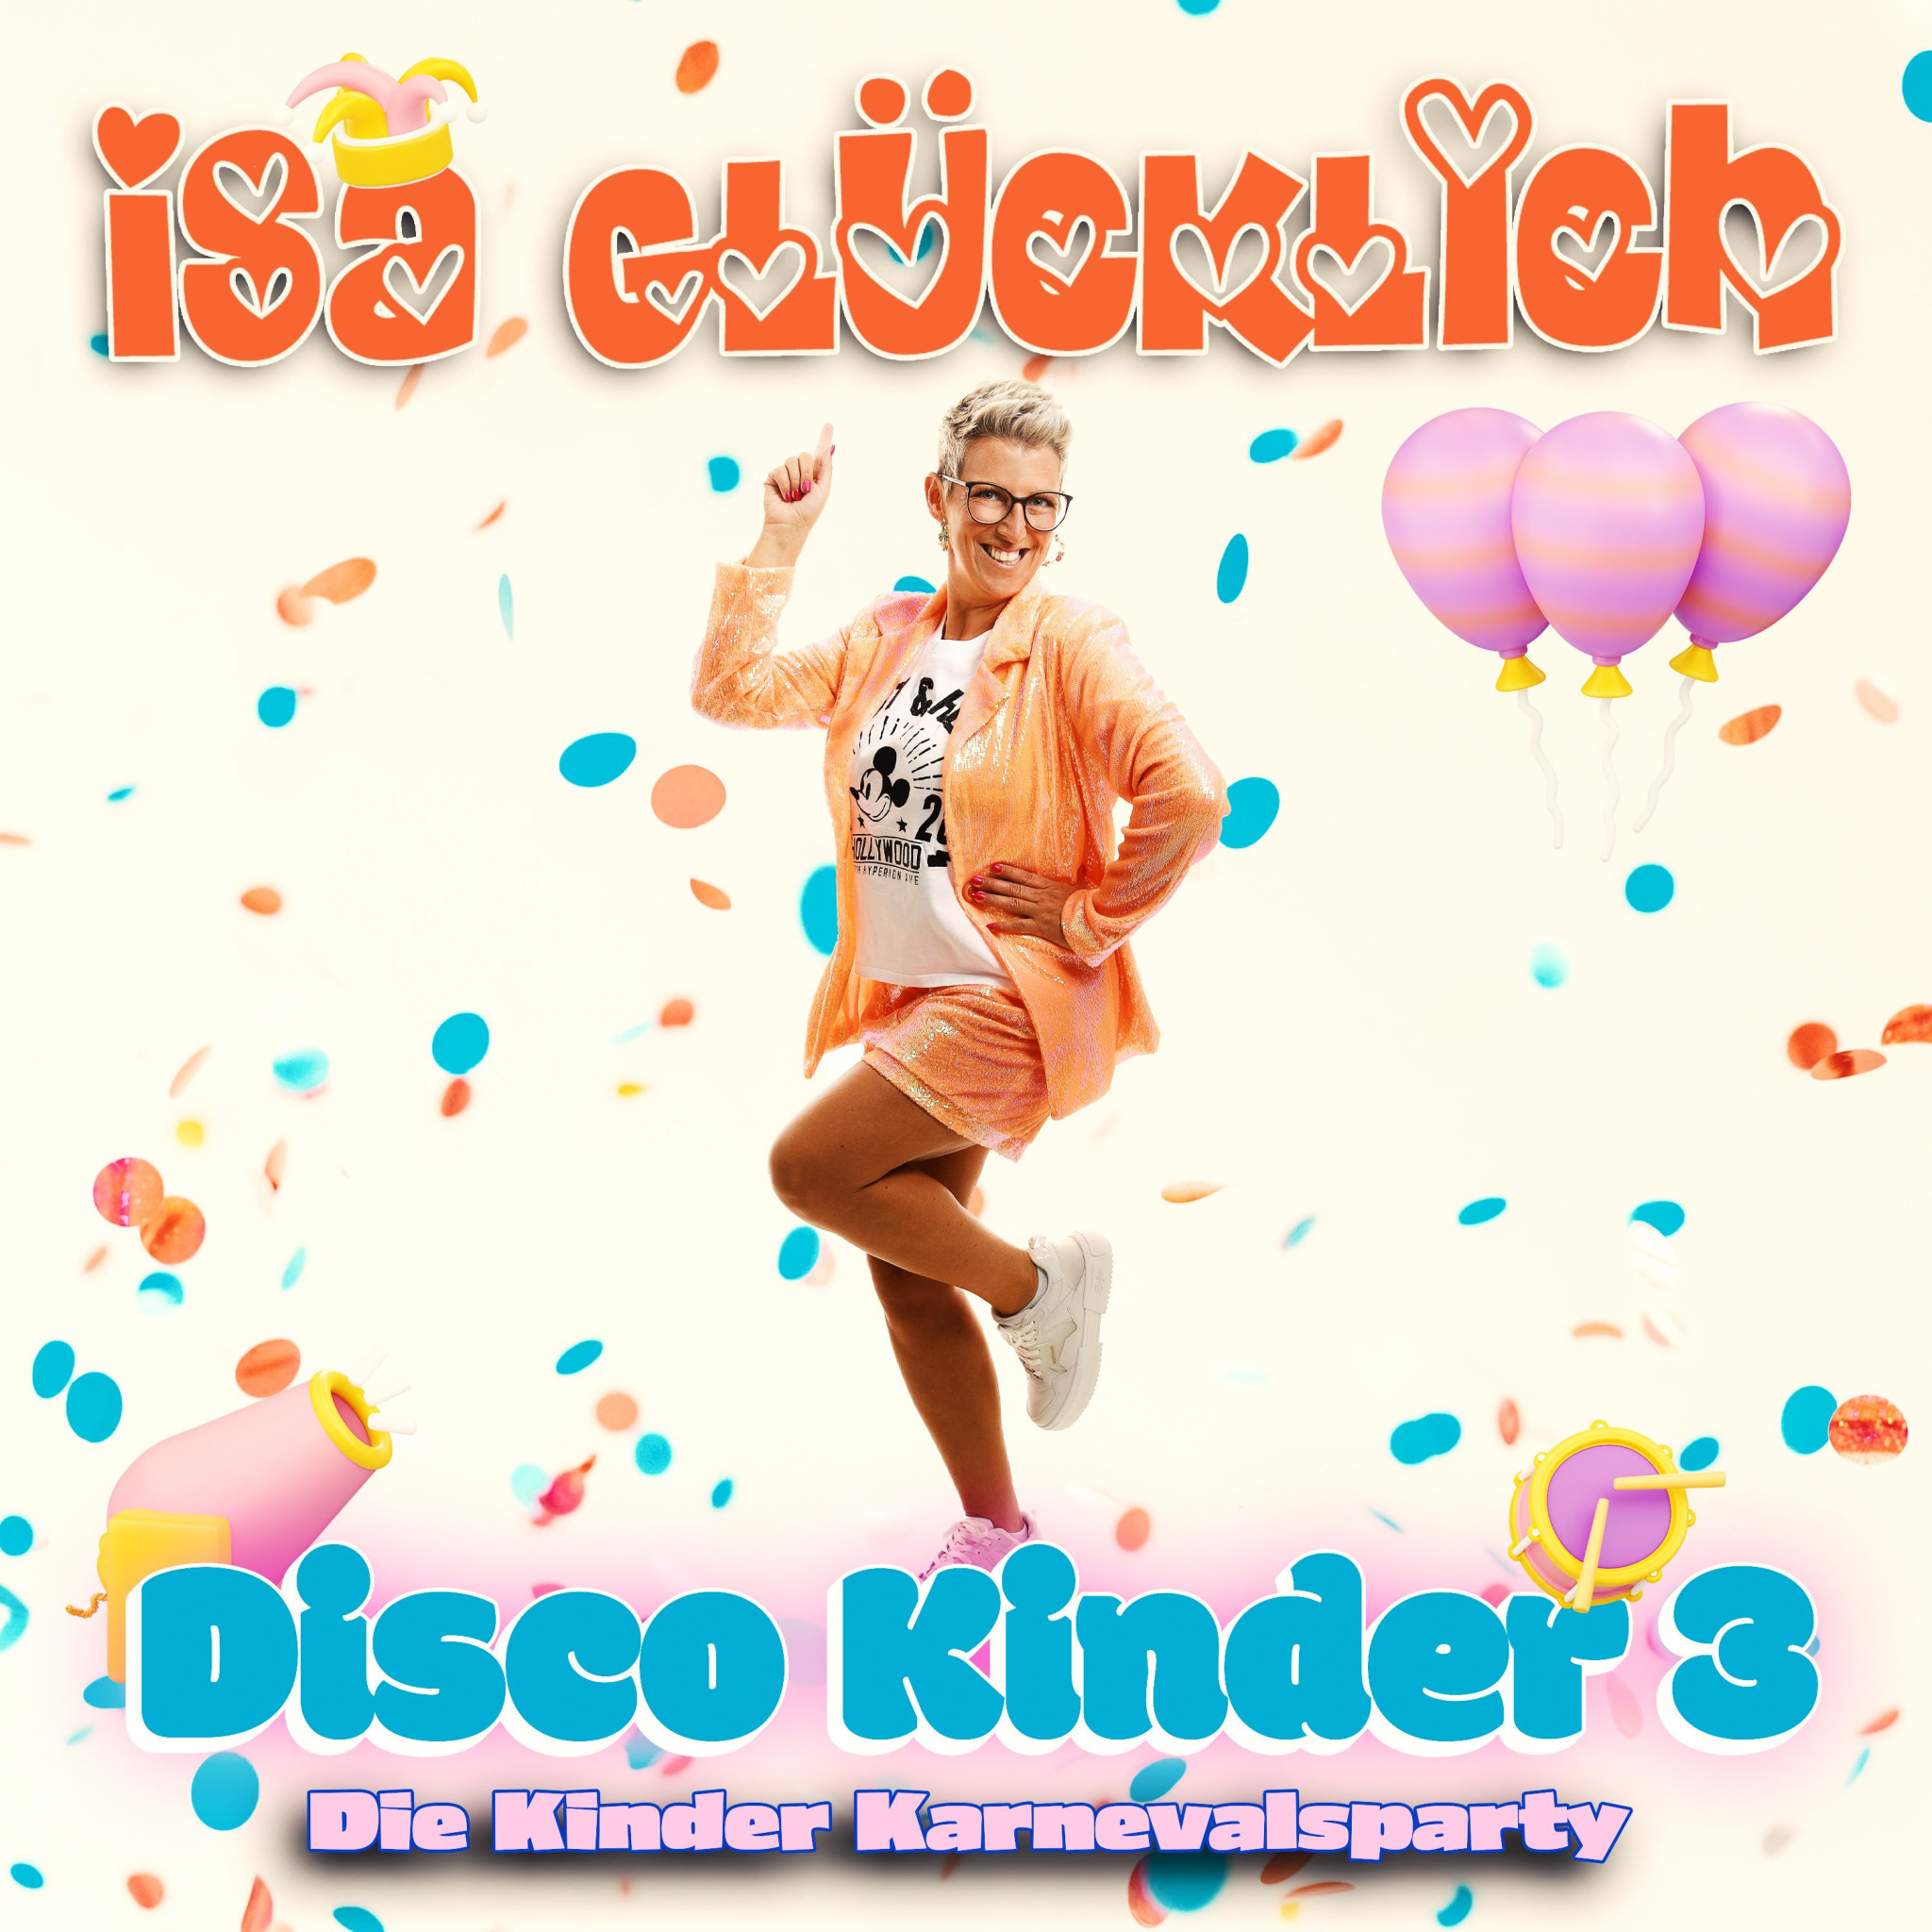 Cover ISA GLÜCKLICH - DISCOKINDER 3 Kinder Karnevalsparty CD.jpg